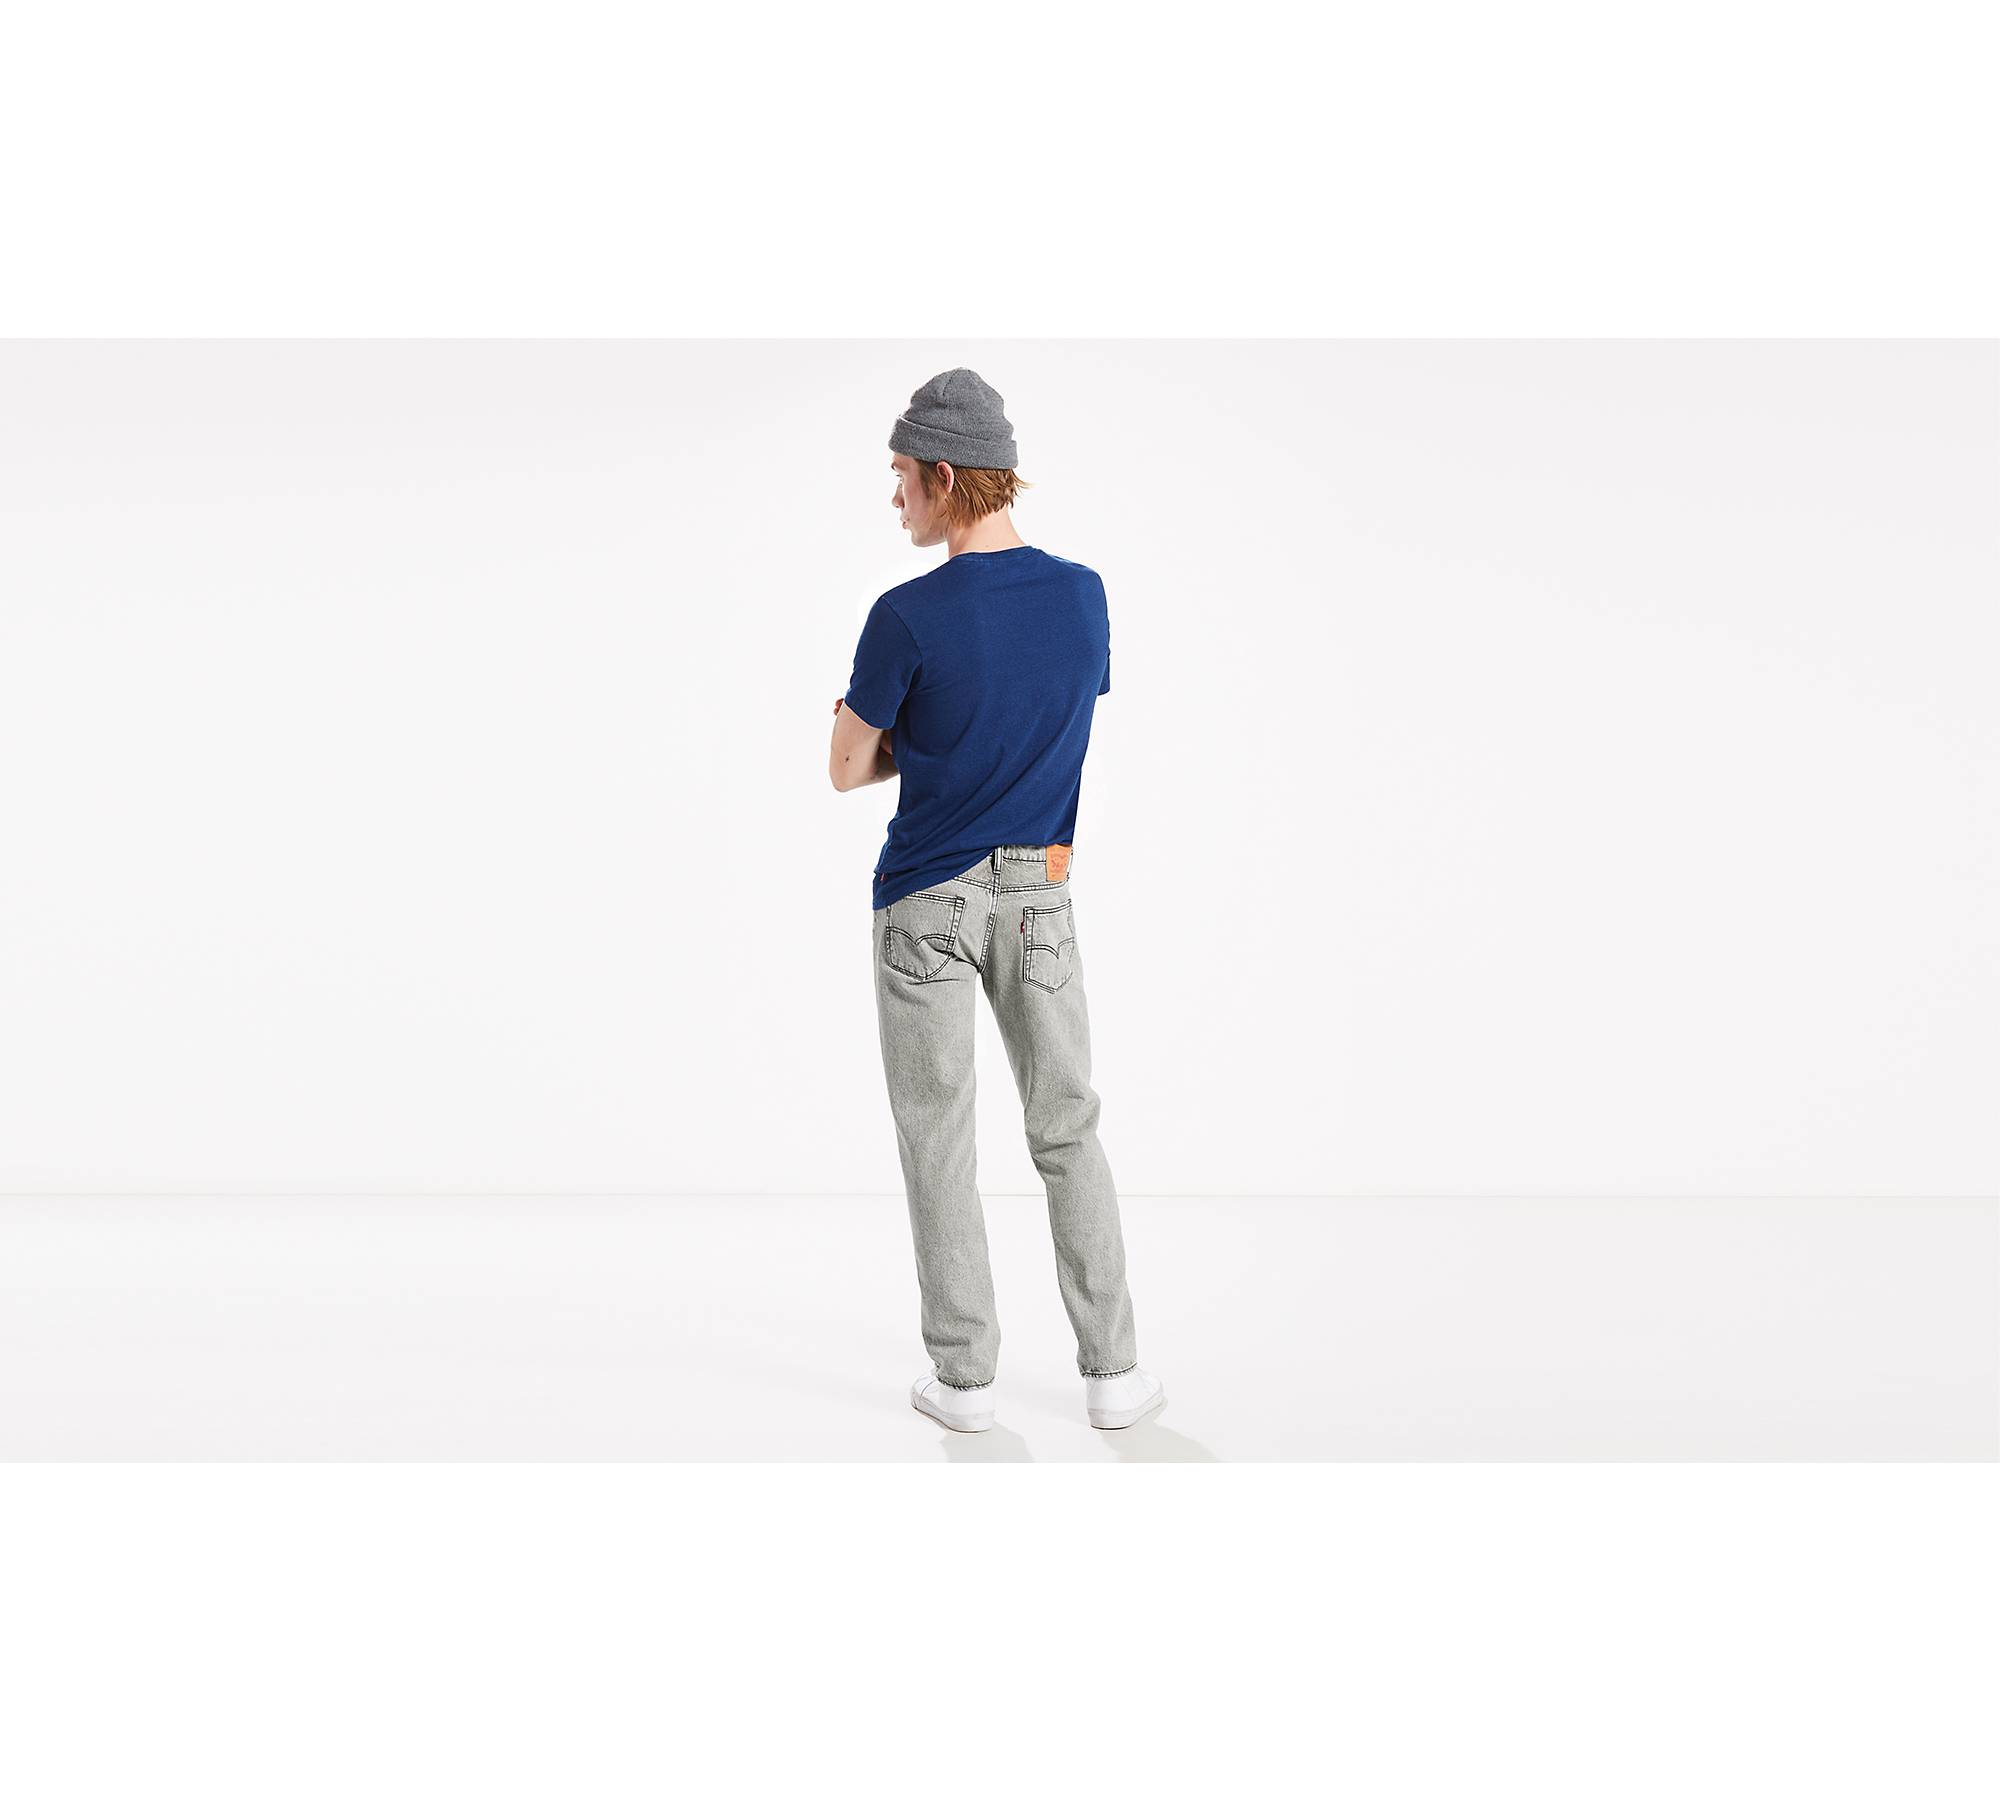 511™ Slim Fit Men's Jeans - Grey